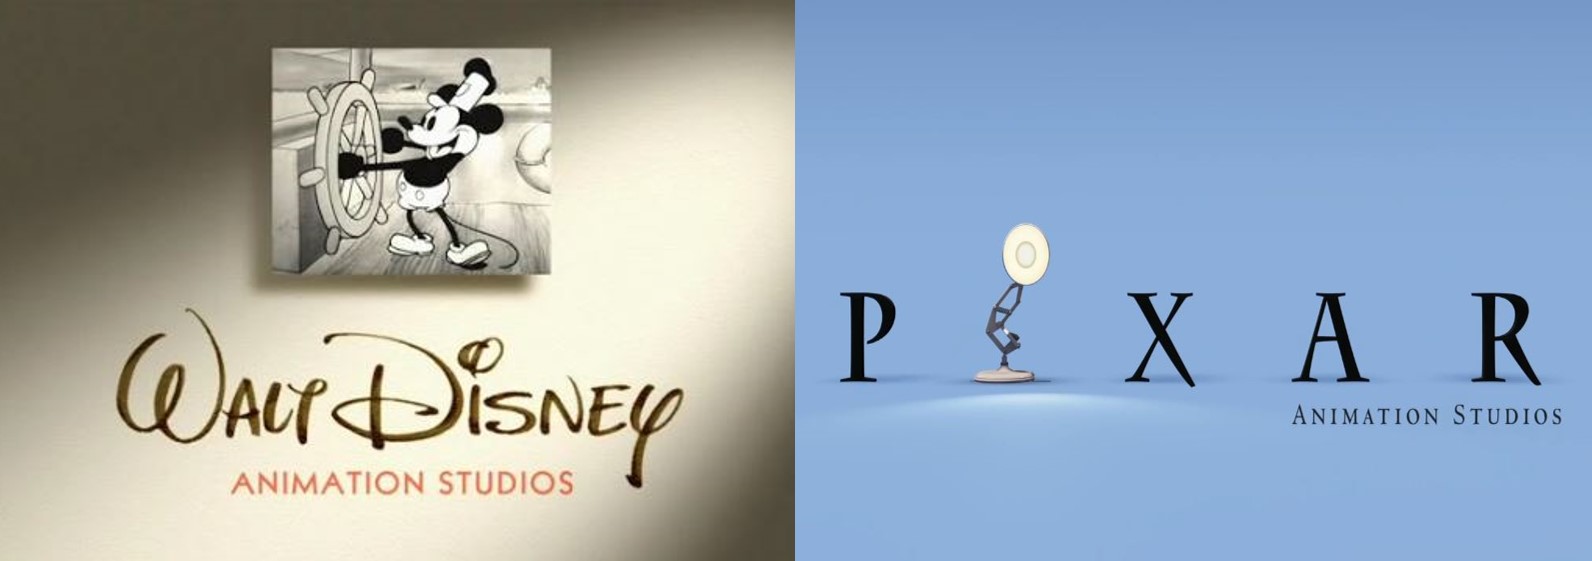 Disney Animation Pixar